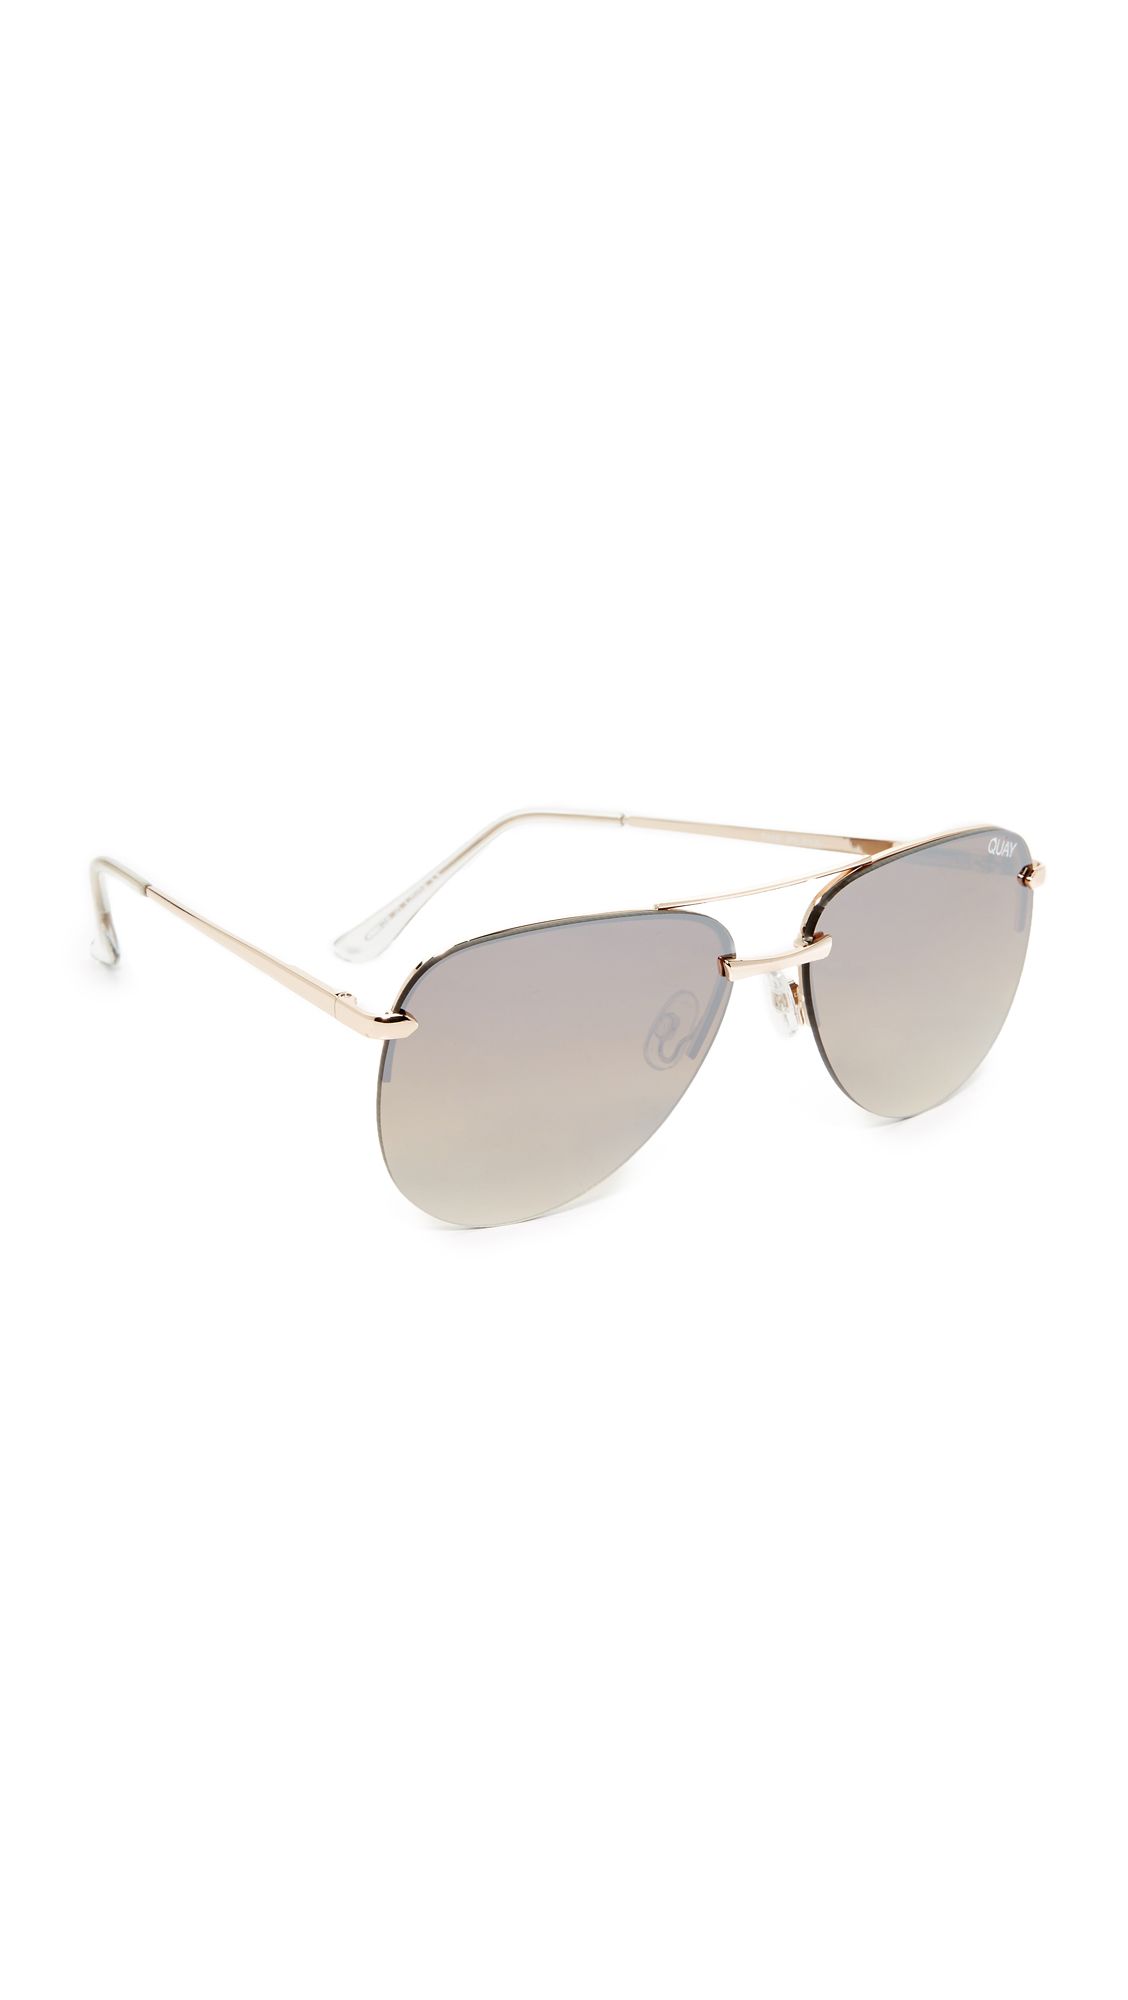 Quay The Playa Sunglasses - Gold/Brown | Shopbop